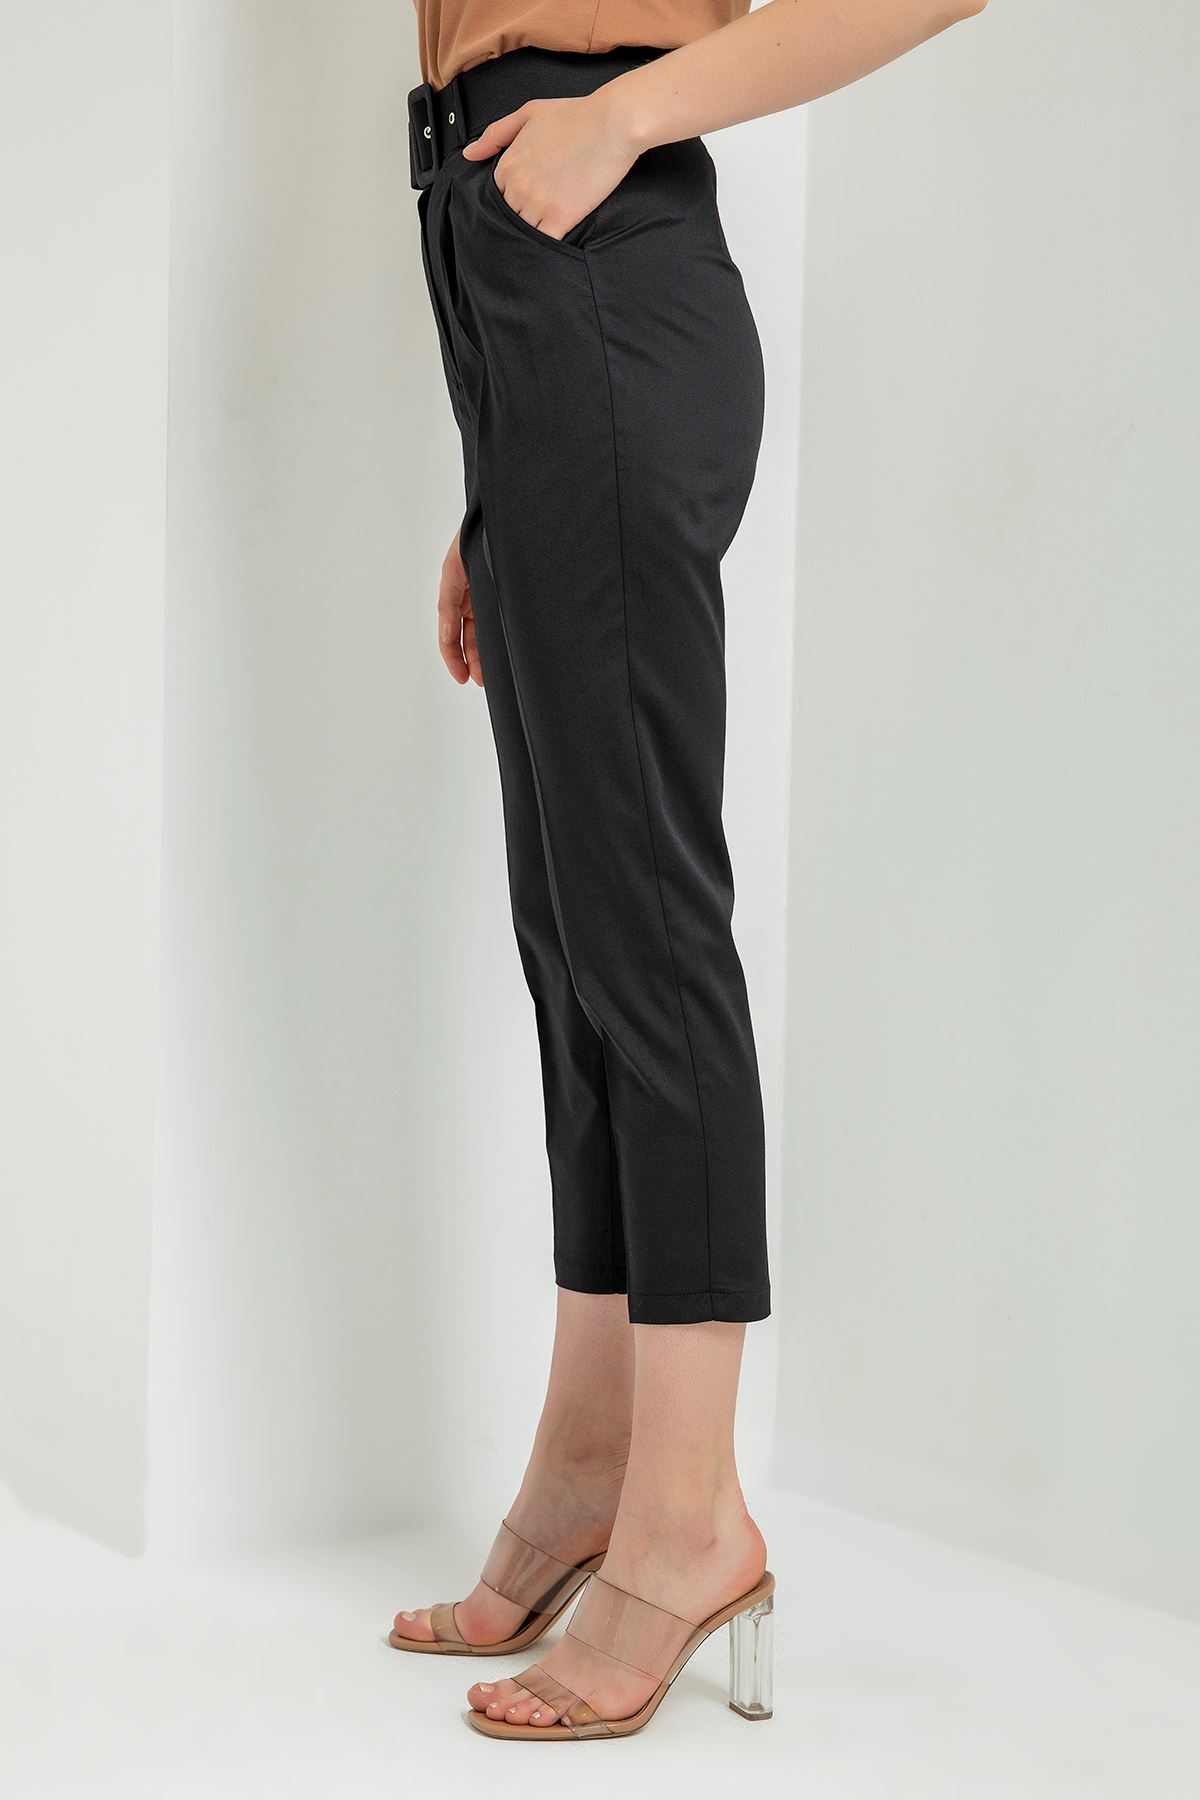 Atlas Fabric 3/4 Short Belted Women'S Trouser - Black